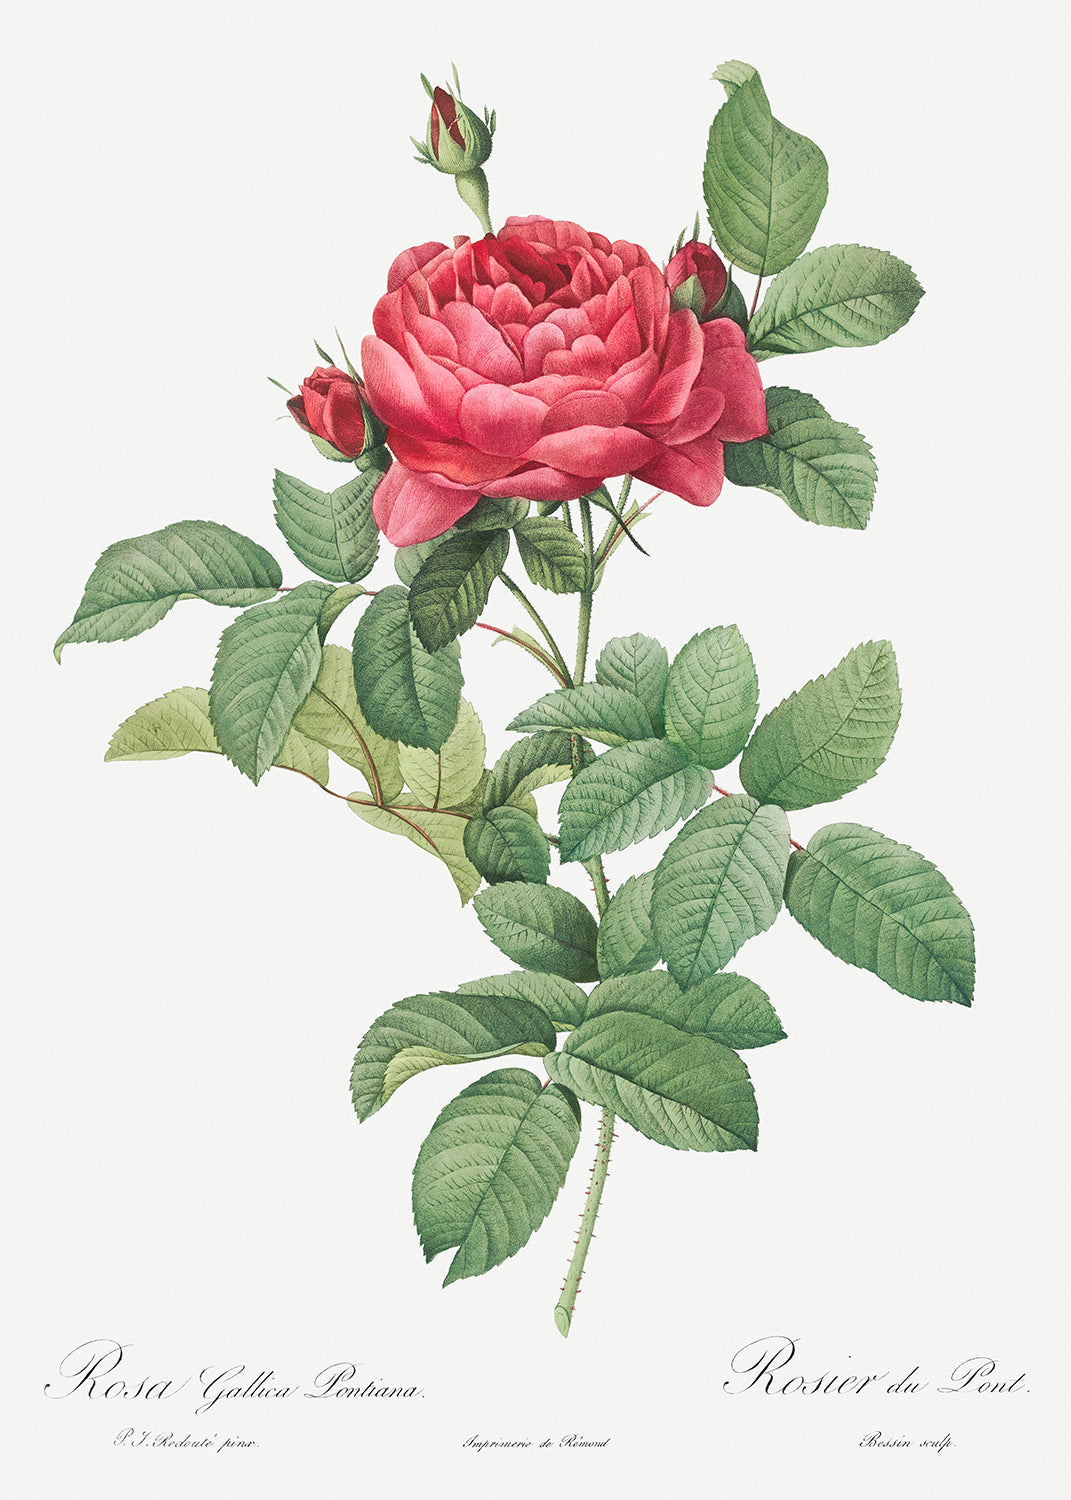 Botanical Plant Print - Rosa gallica pontiana (Bridge Rose) by Pierre Joseph Redoute